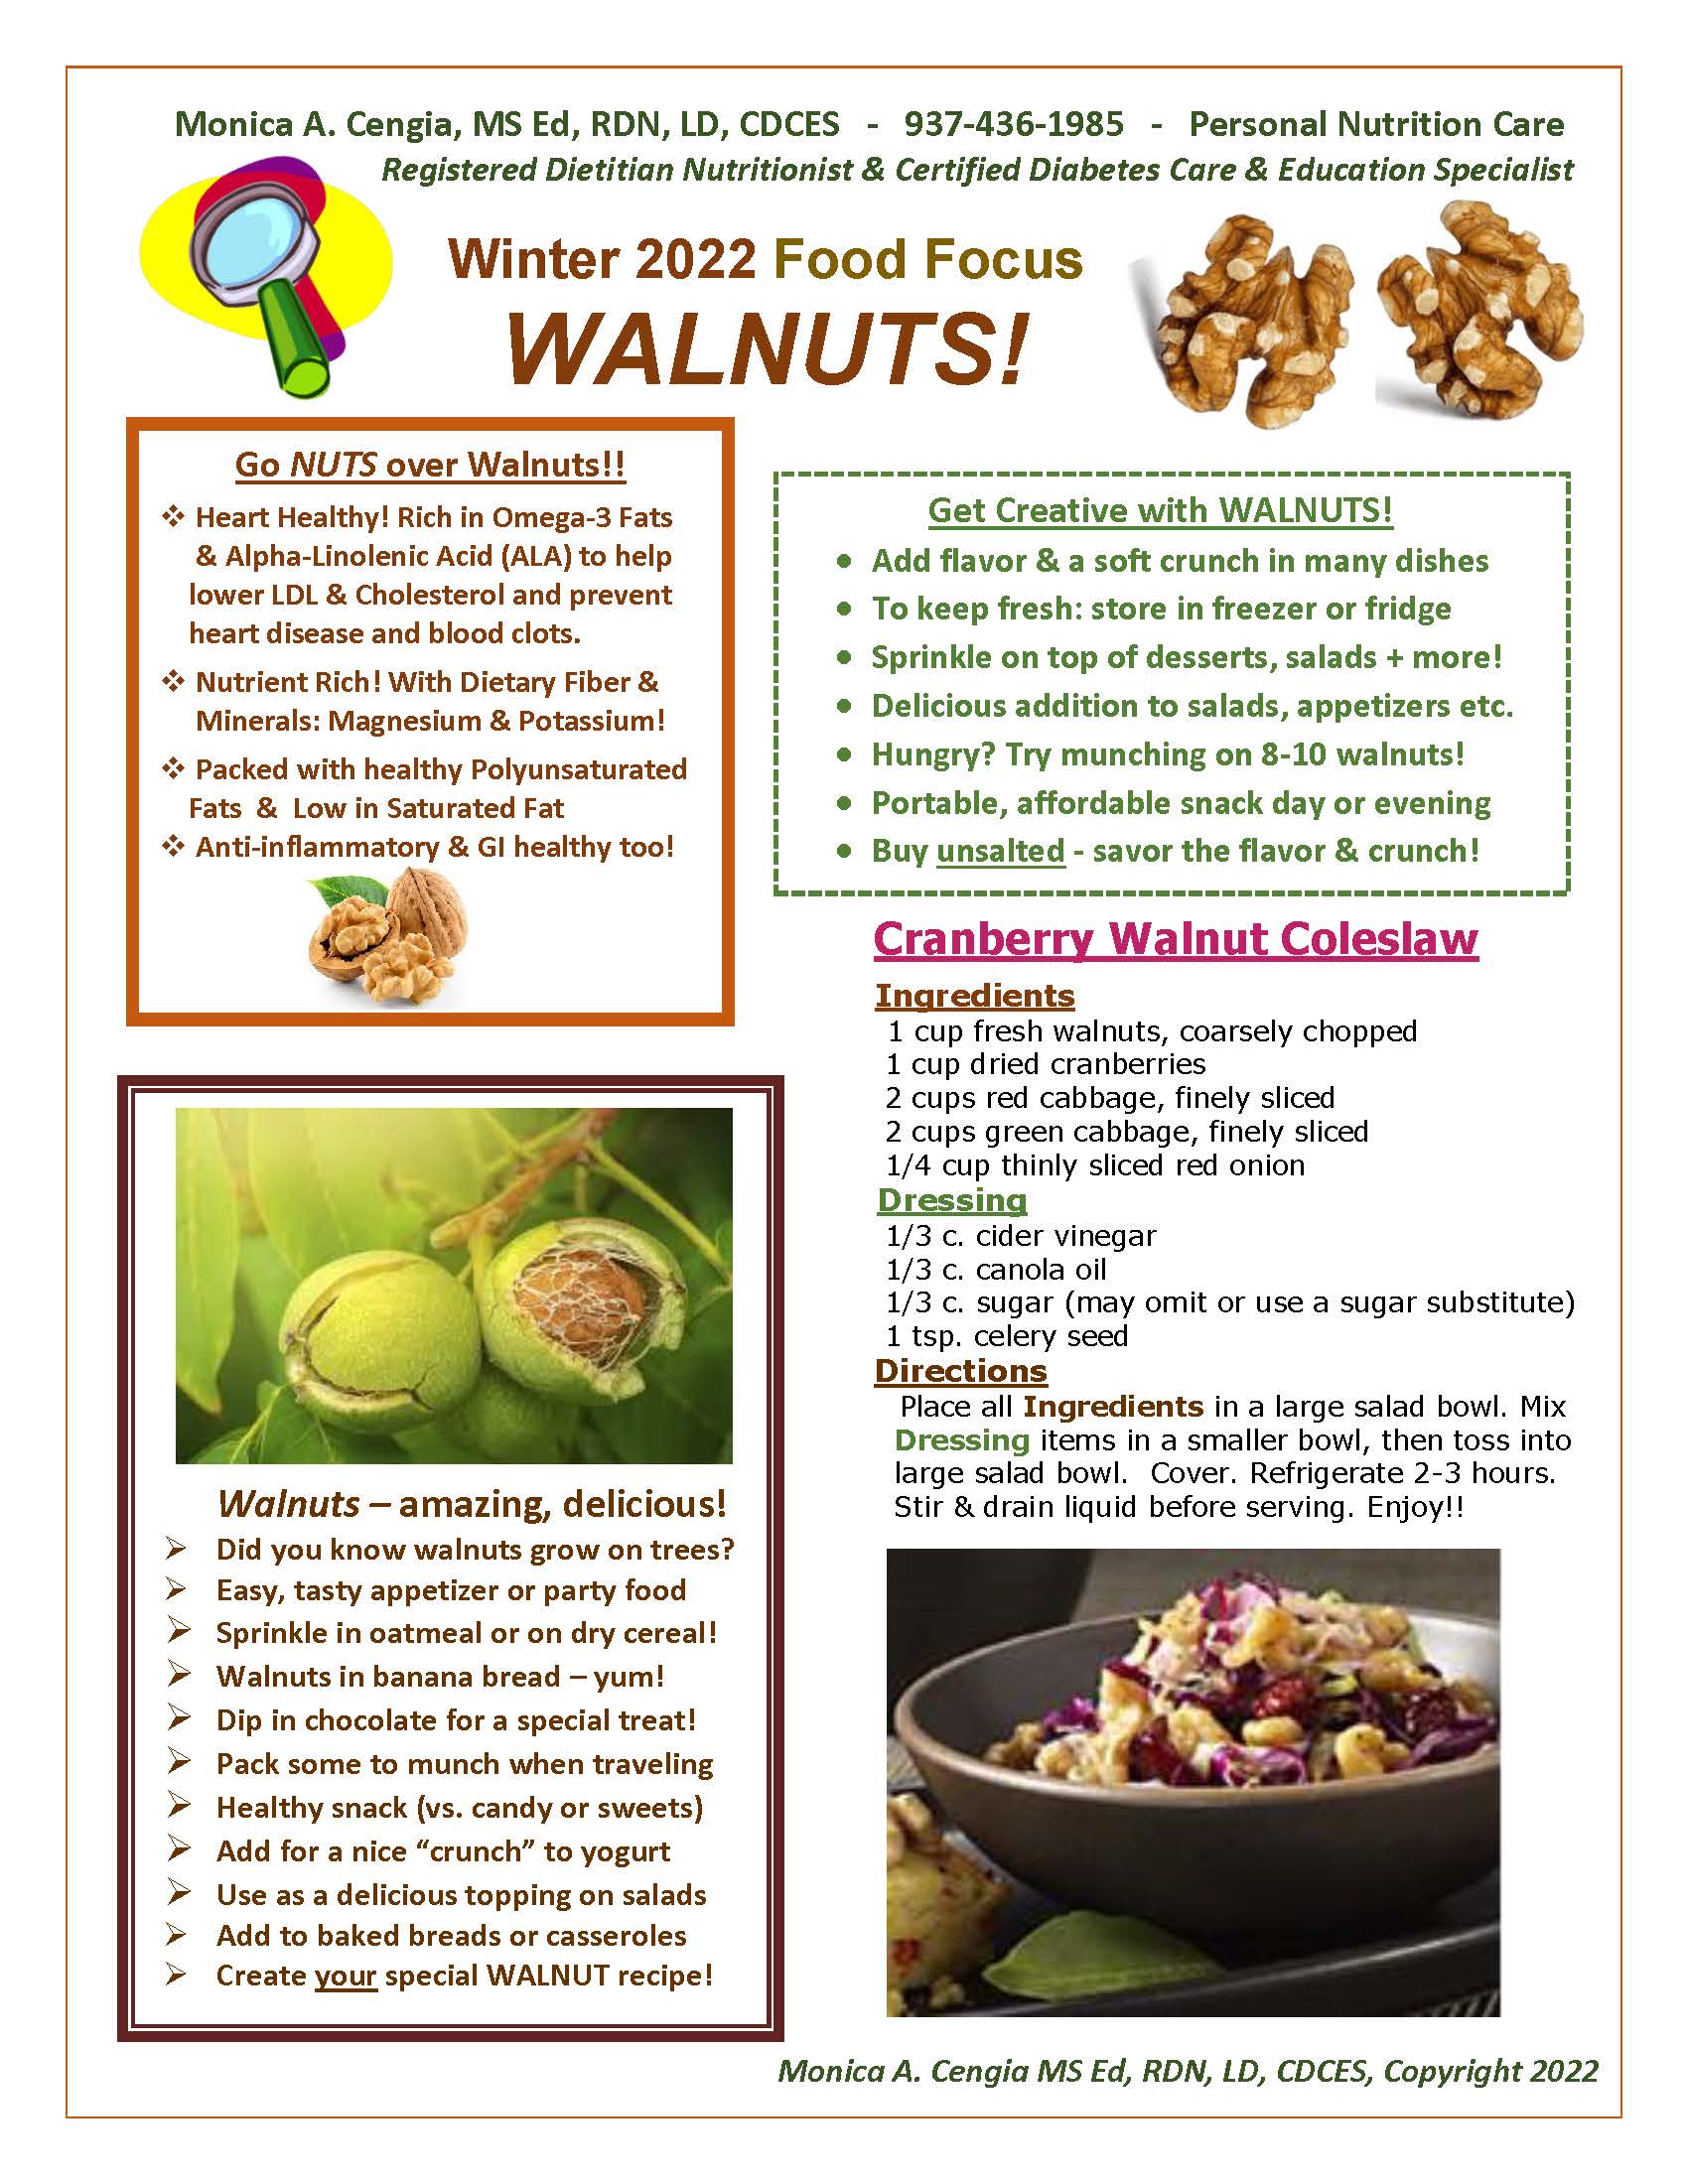 Flyer on walnuts